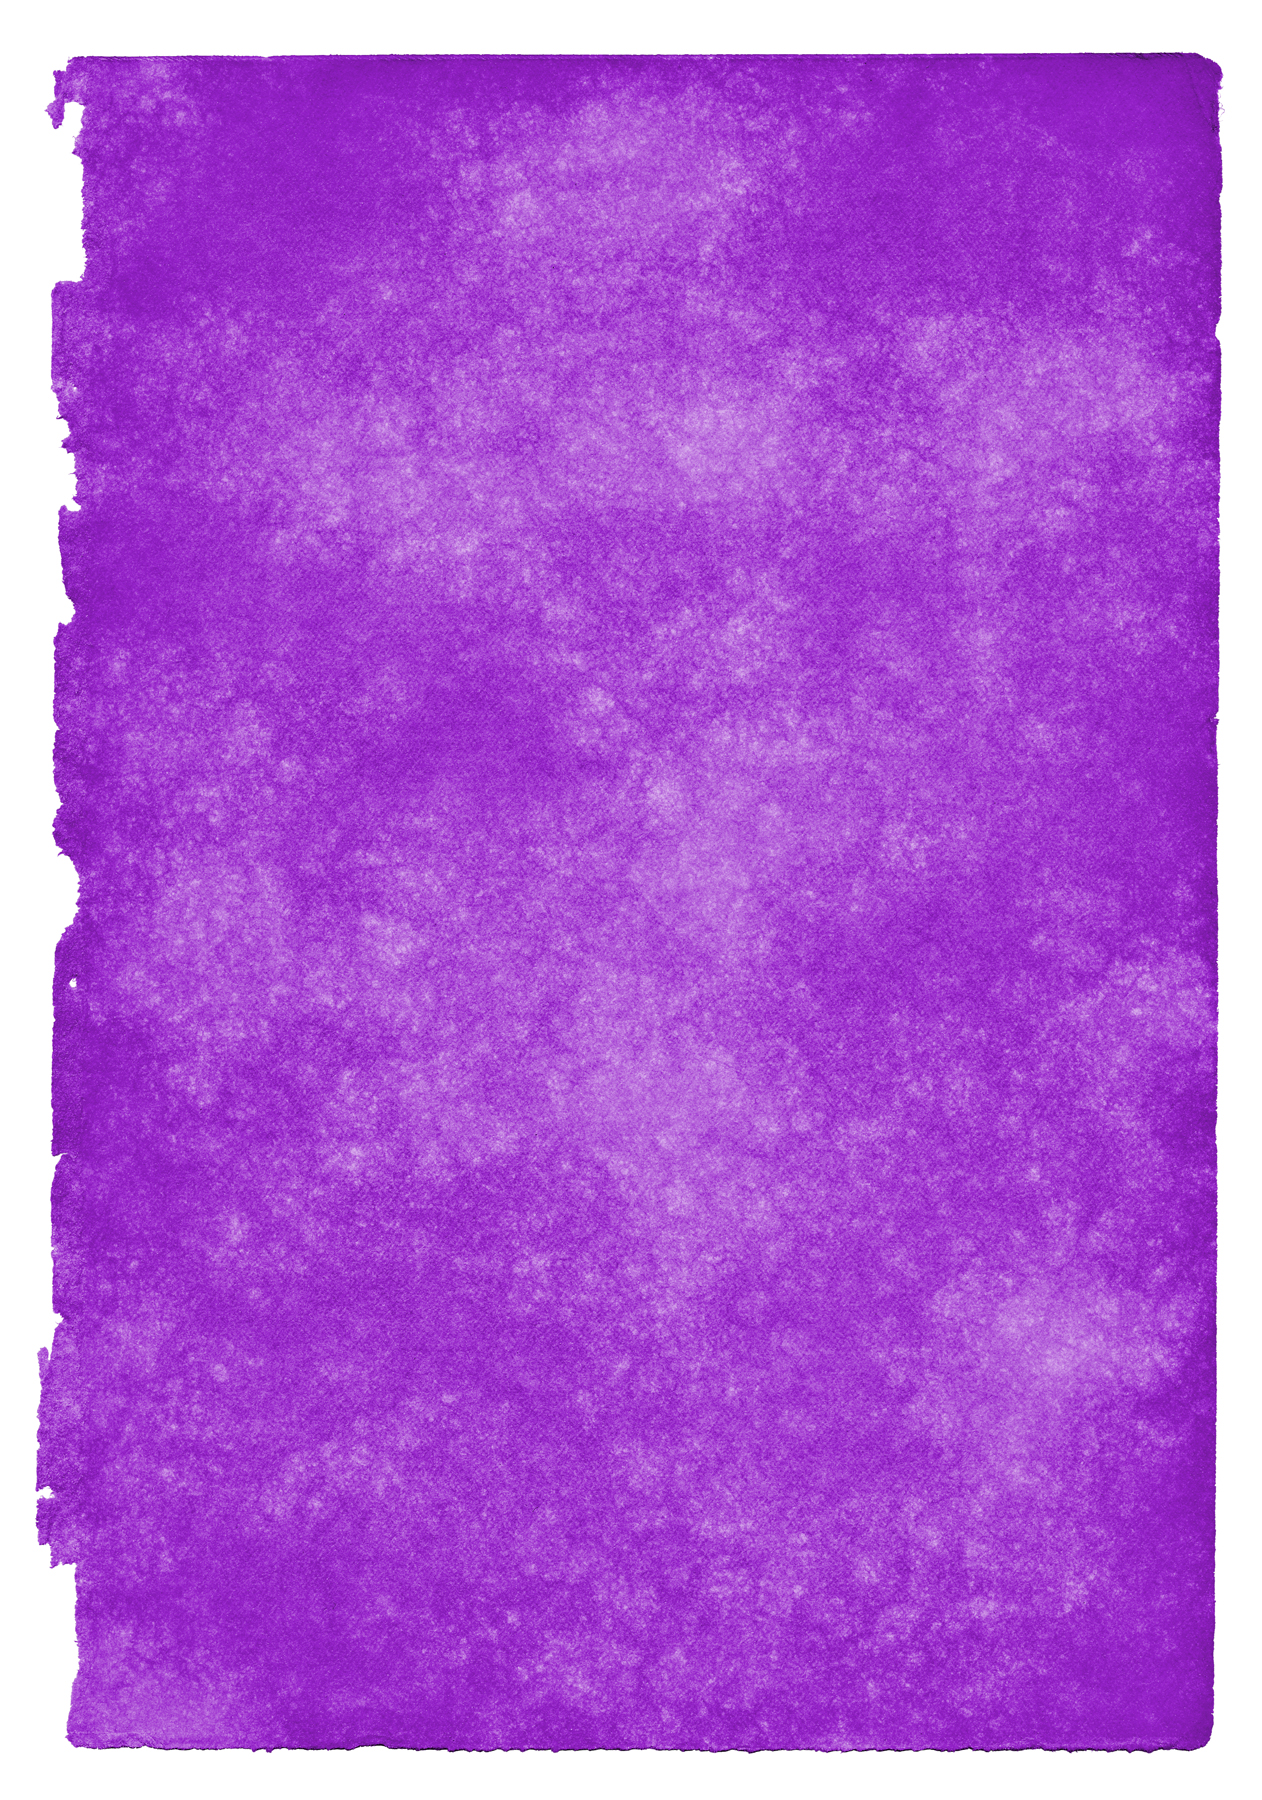 Vintage grunge paper - purple photo